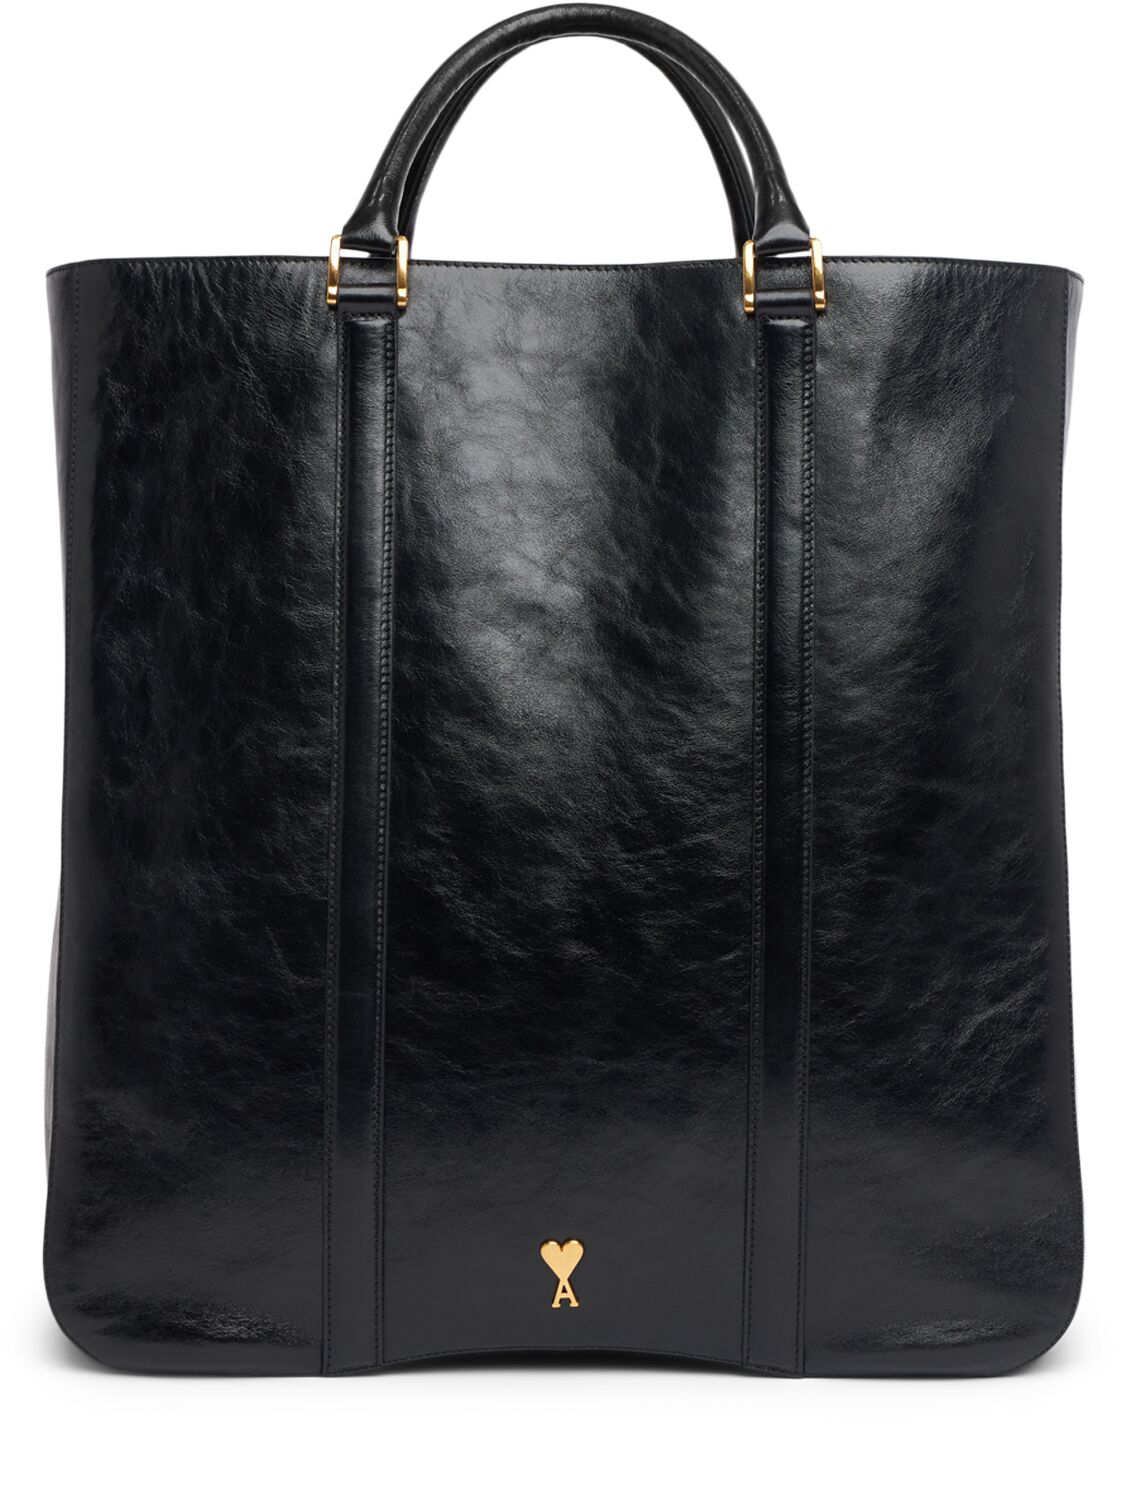 Ami Alexandre Mattiussi N/s Paris Paris Shiny Leather Tote Bag In Black